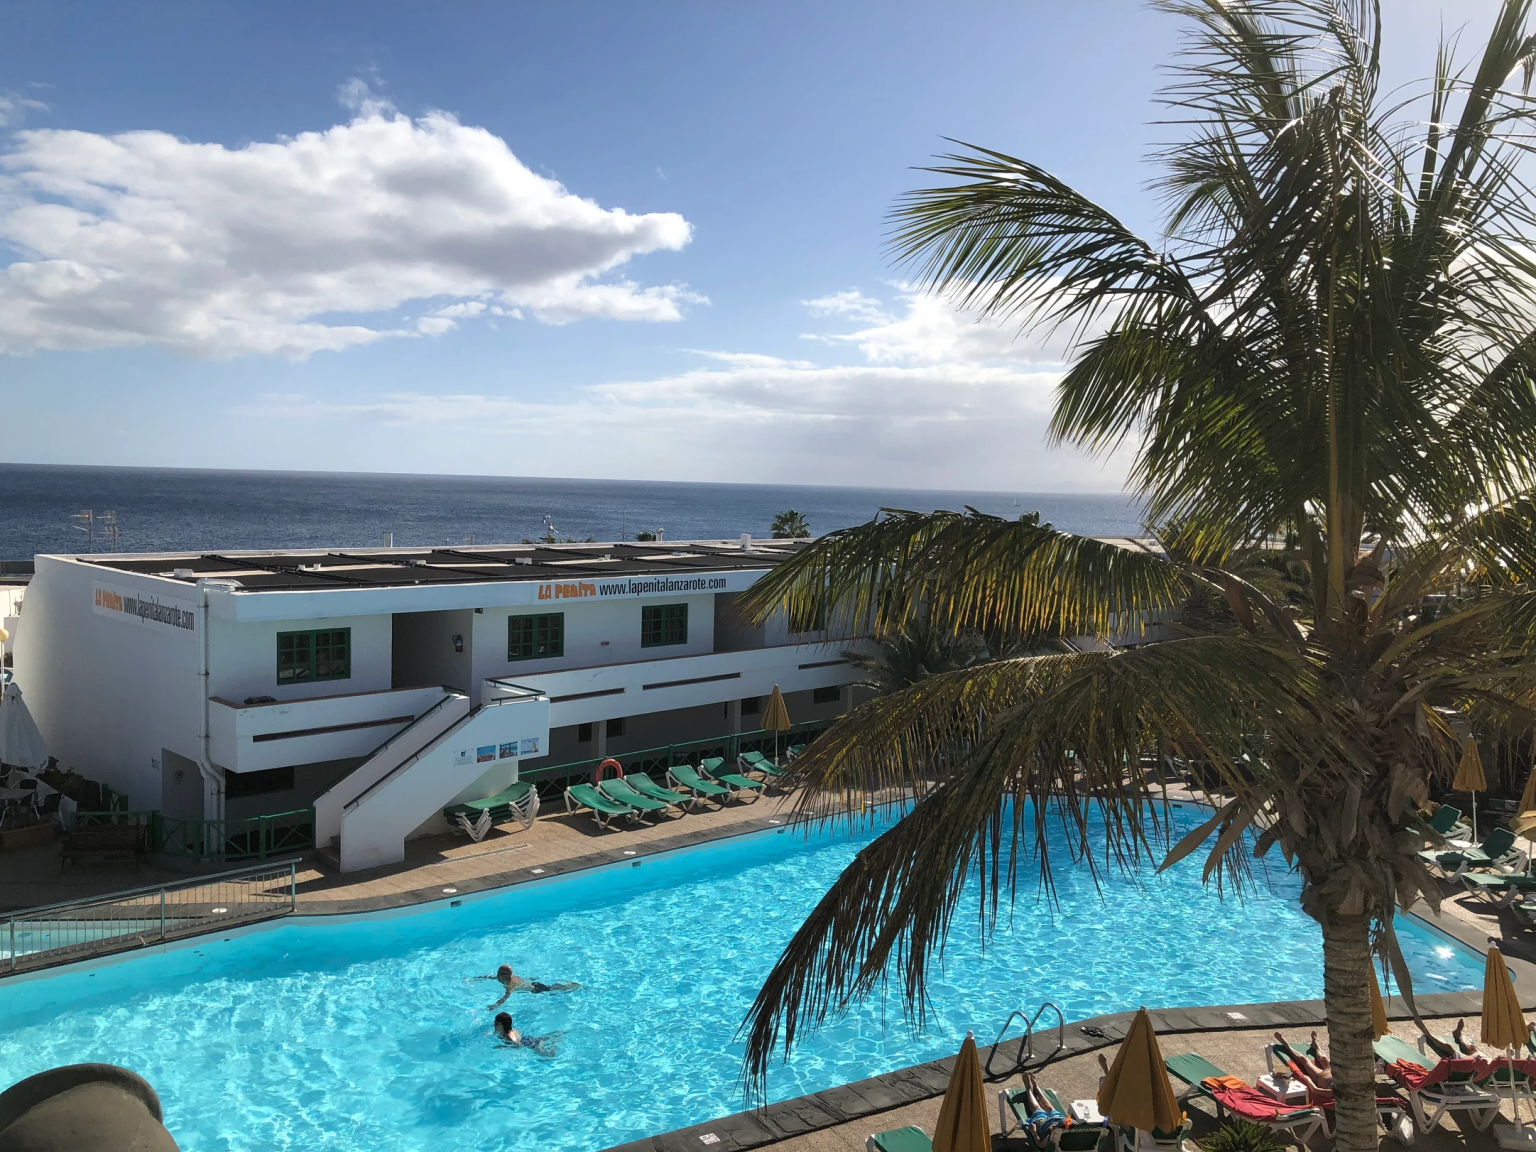 2019 – Lanzarote – Day 0/1